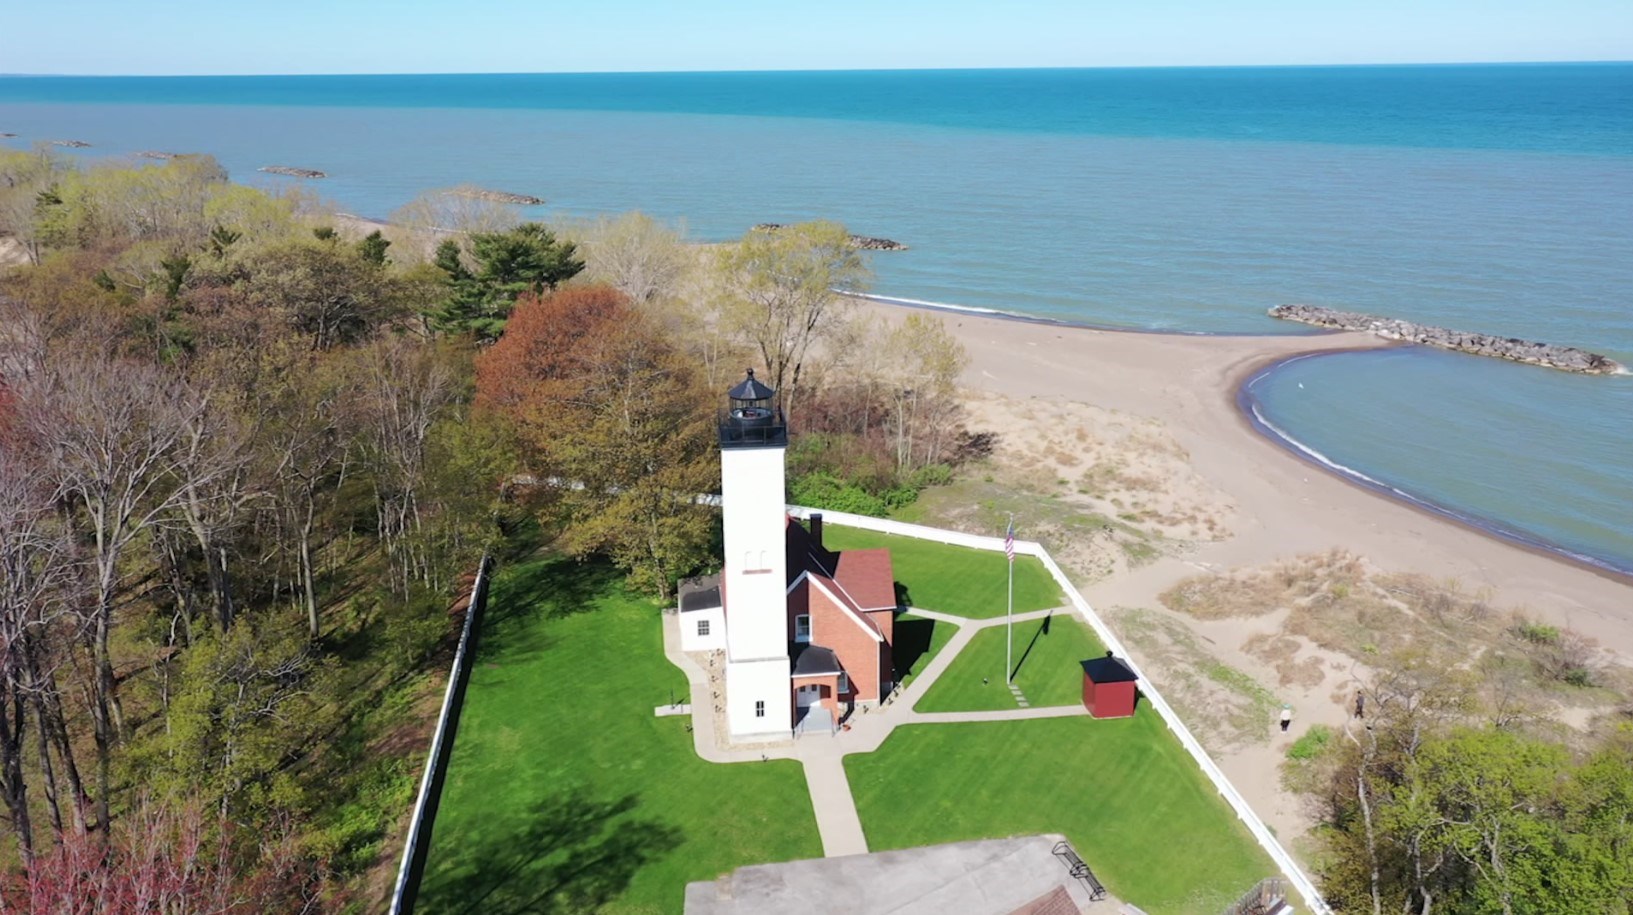 Presque Isle Lighthouse Celebrates Opening Day with New Exhibit